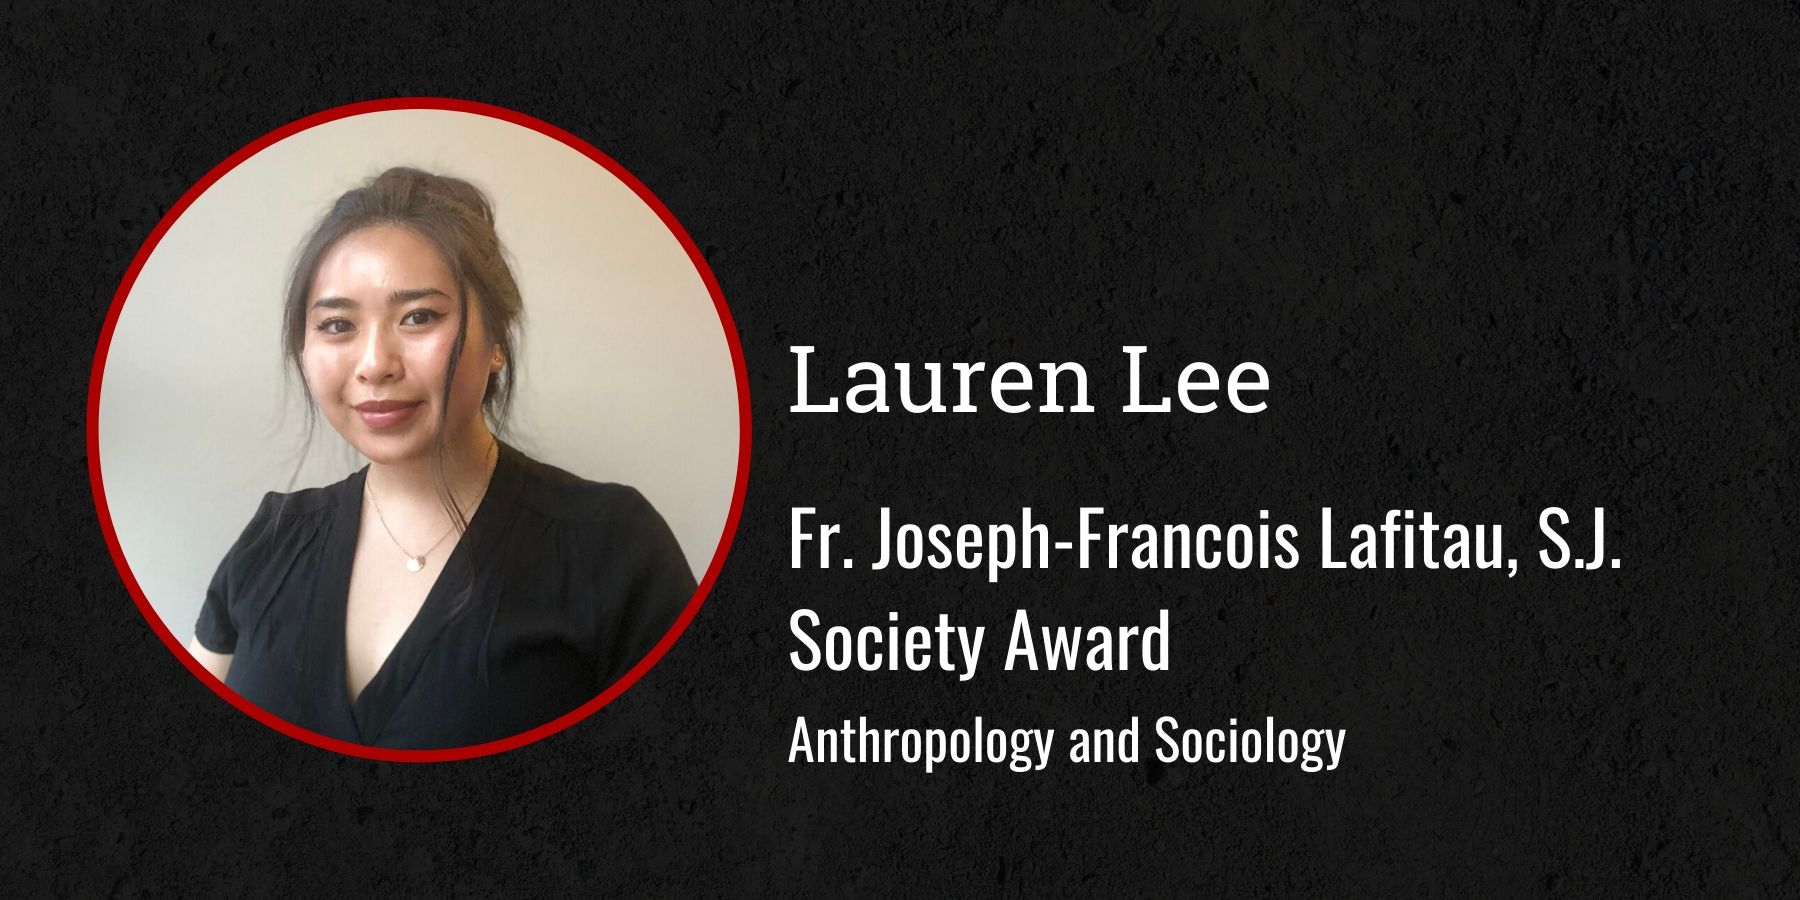 Photo of Lauren Lee and text Fr. Eugene Buechel, S.J. Award,  Anthropology and Sociology